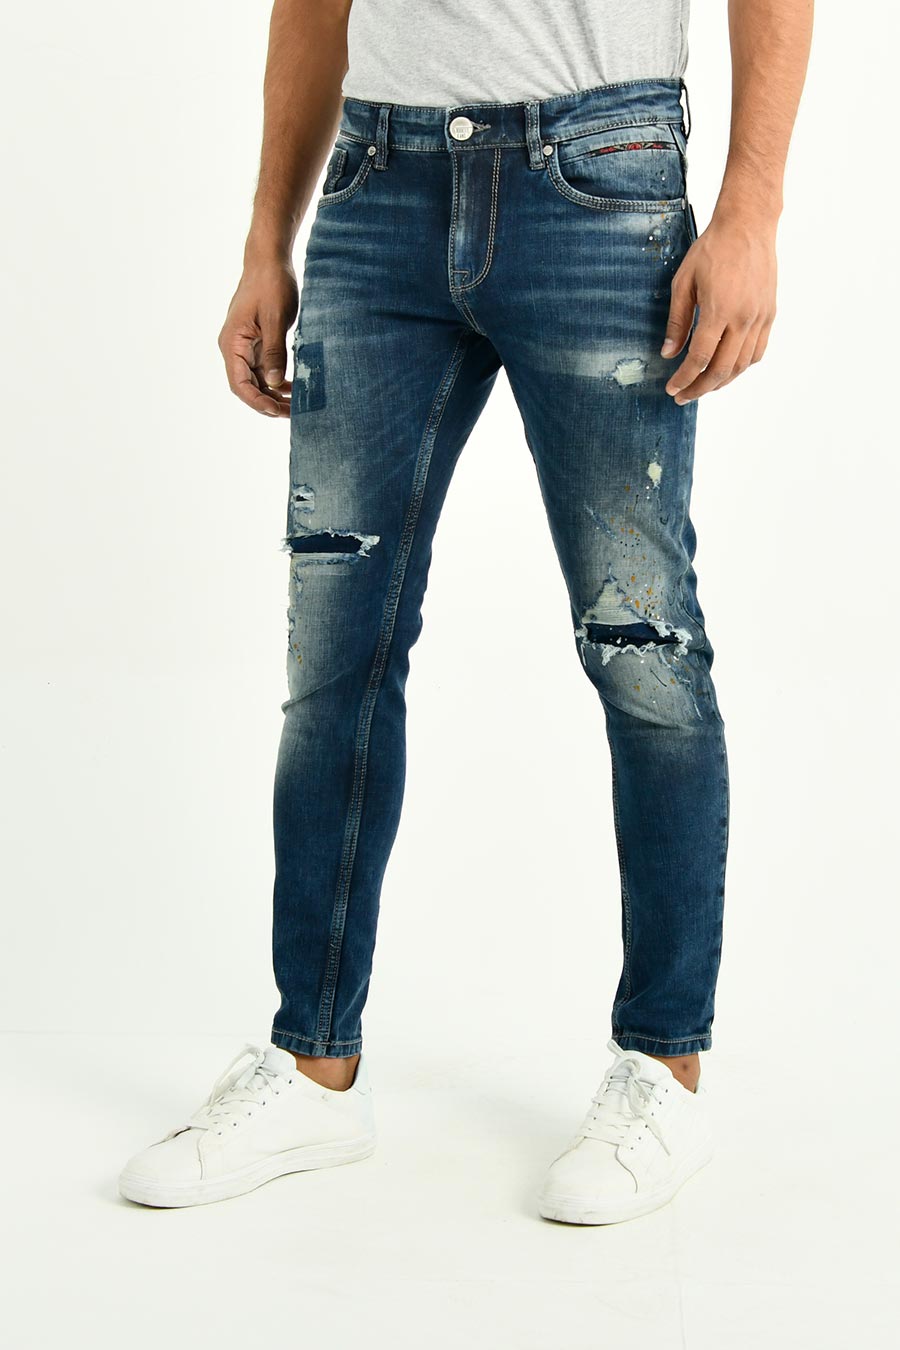 Men’s Denim Jeans- RJ3900